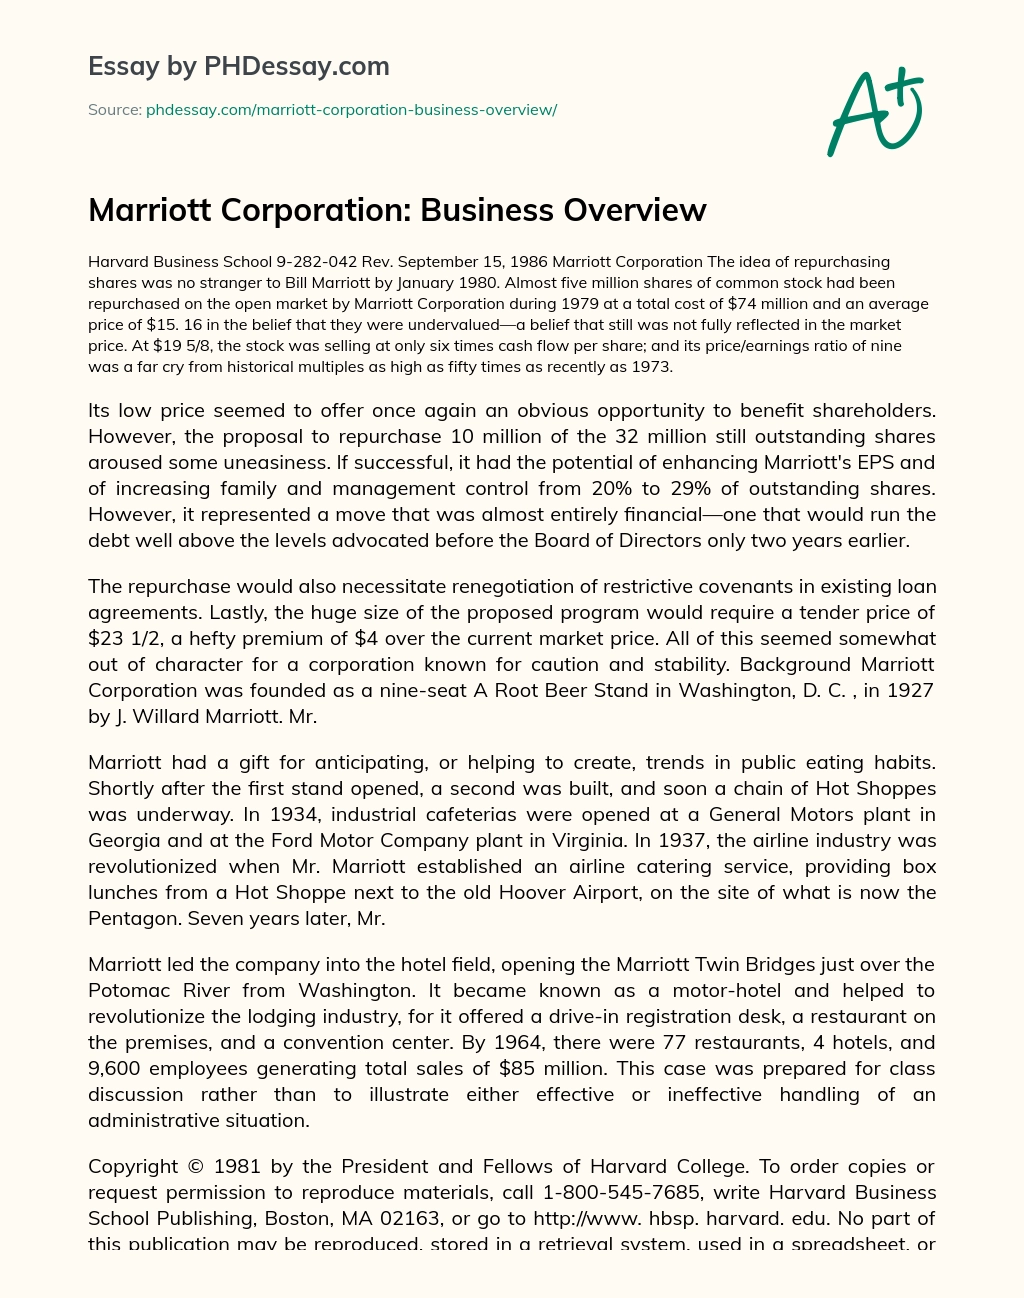 Marriott Corporation: Business Overview essay